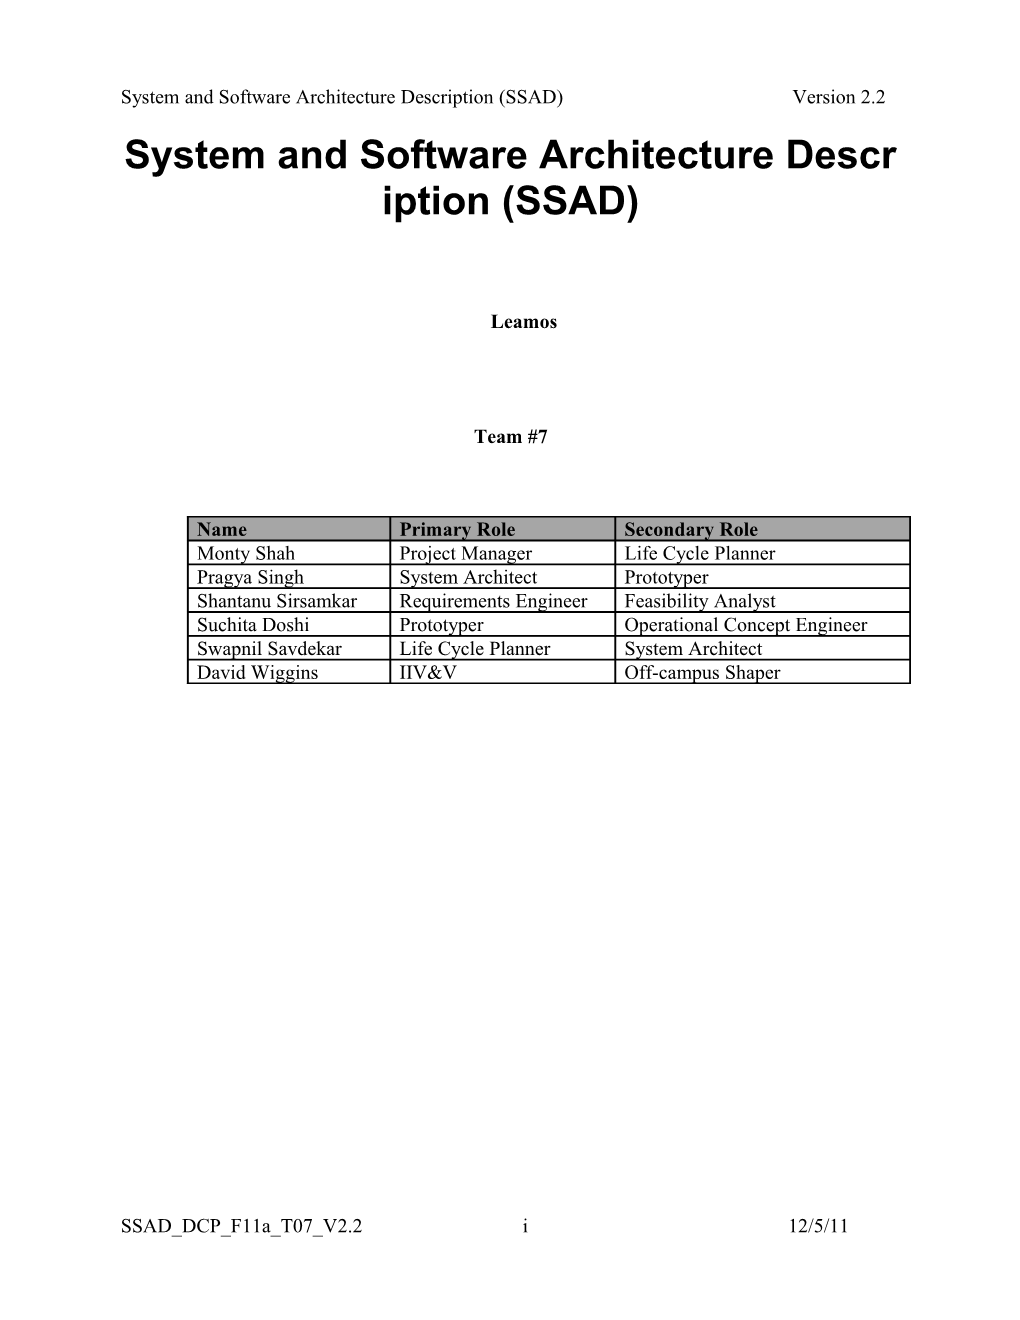 System and Software Architecture Description (SSAD) s2